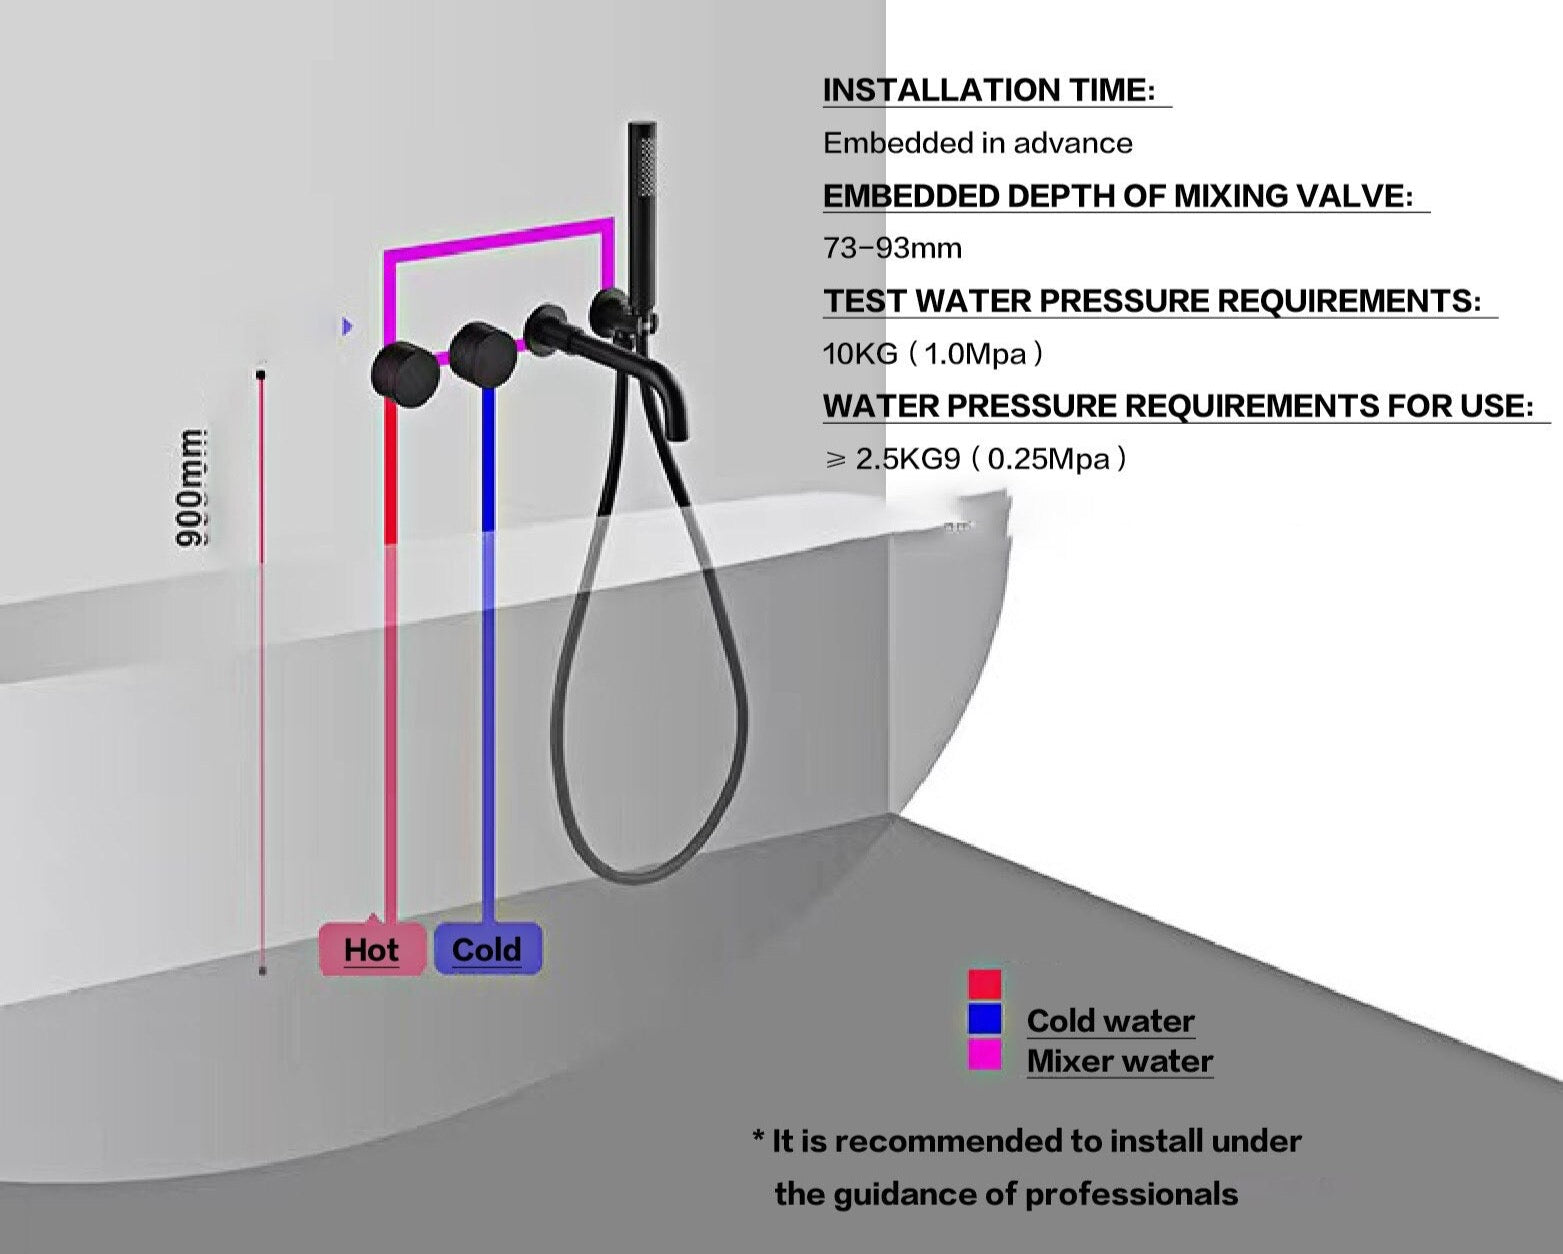 Shower Faucet Set Mixer Valve With Bathtub Filler